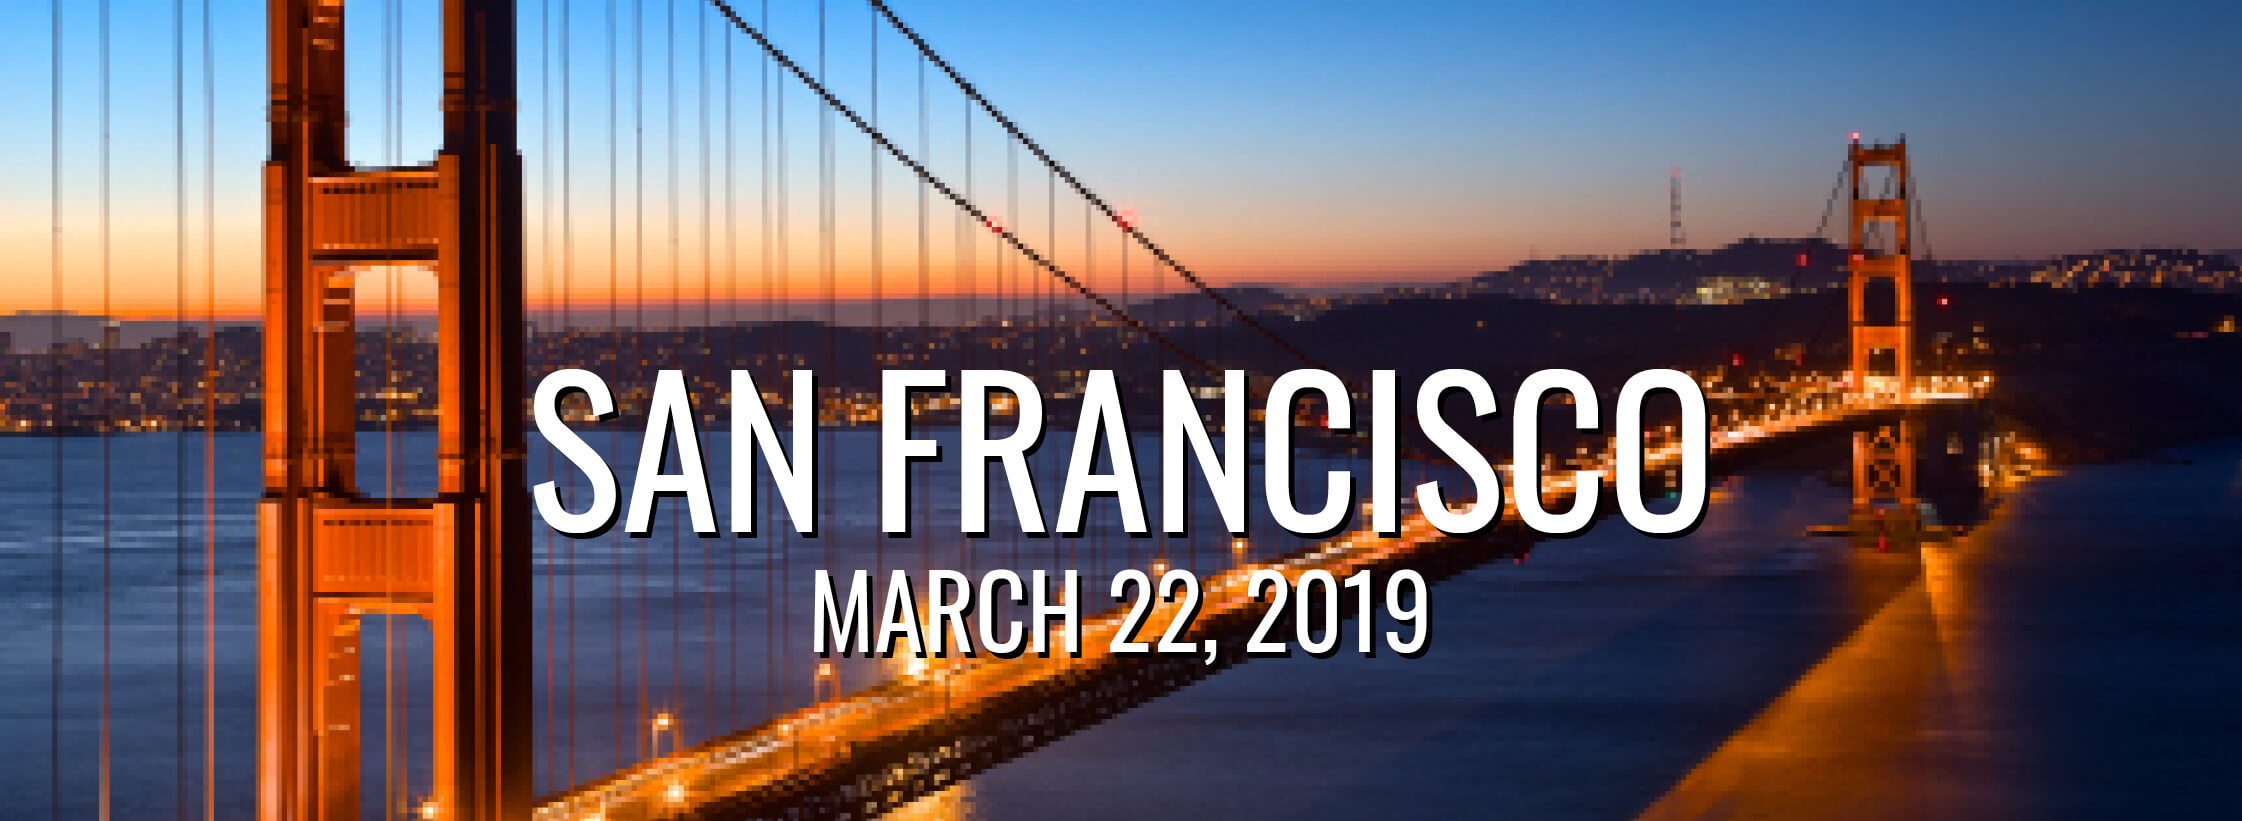 San Francisco Workshop, March 22, 2019